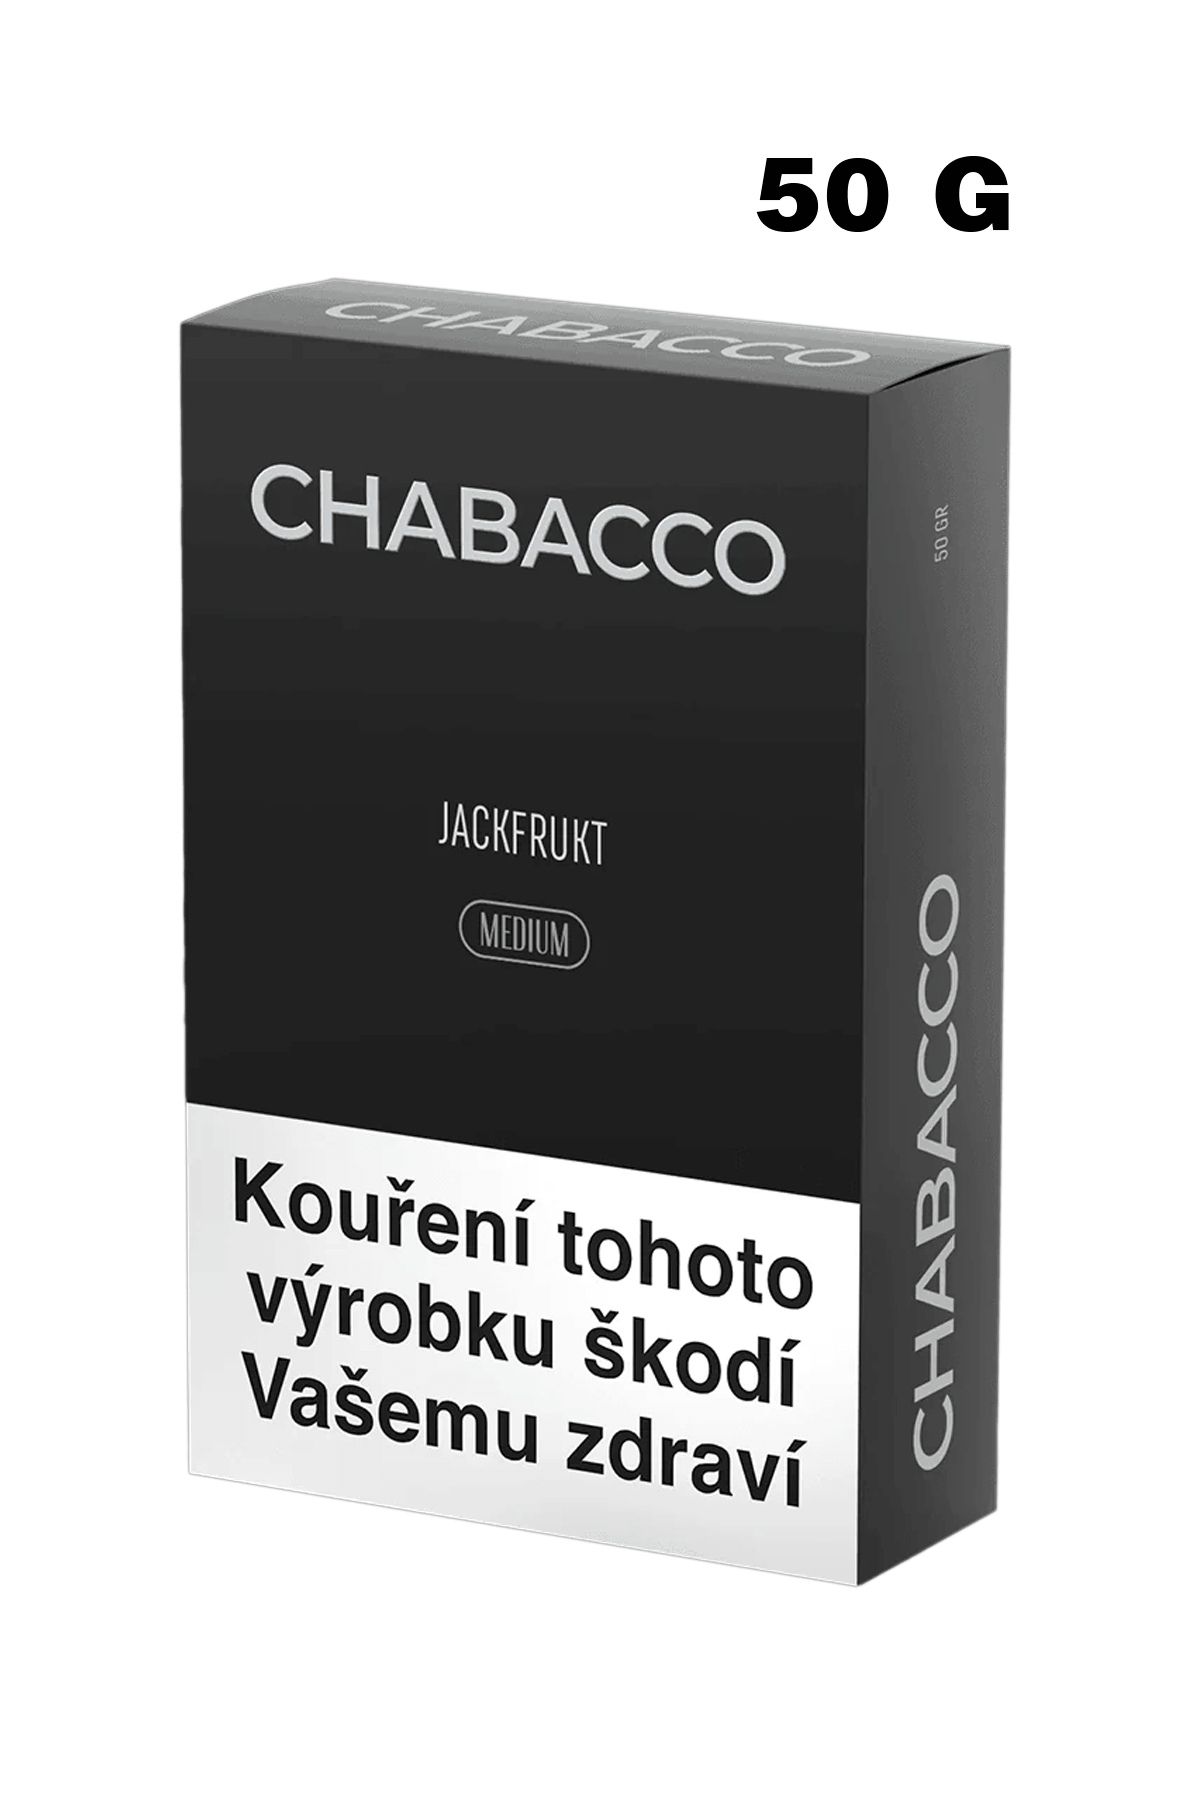 Tobacco - Chabacco Medium 50g - Jackfrukt